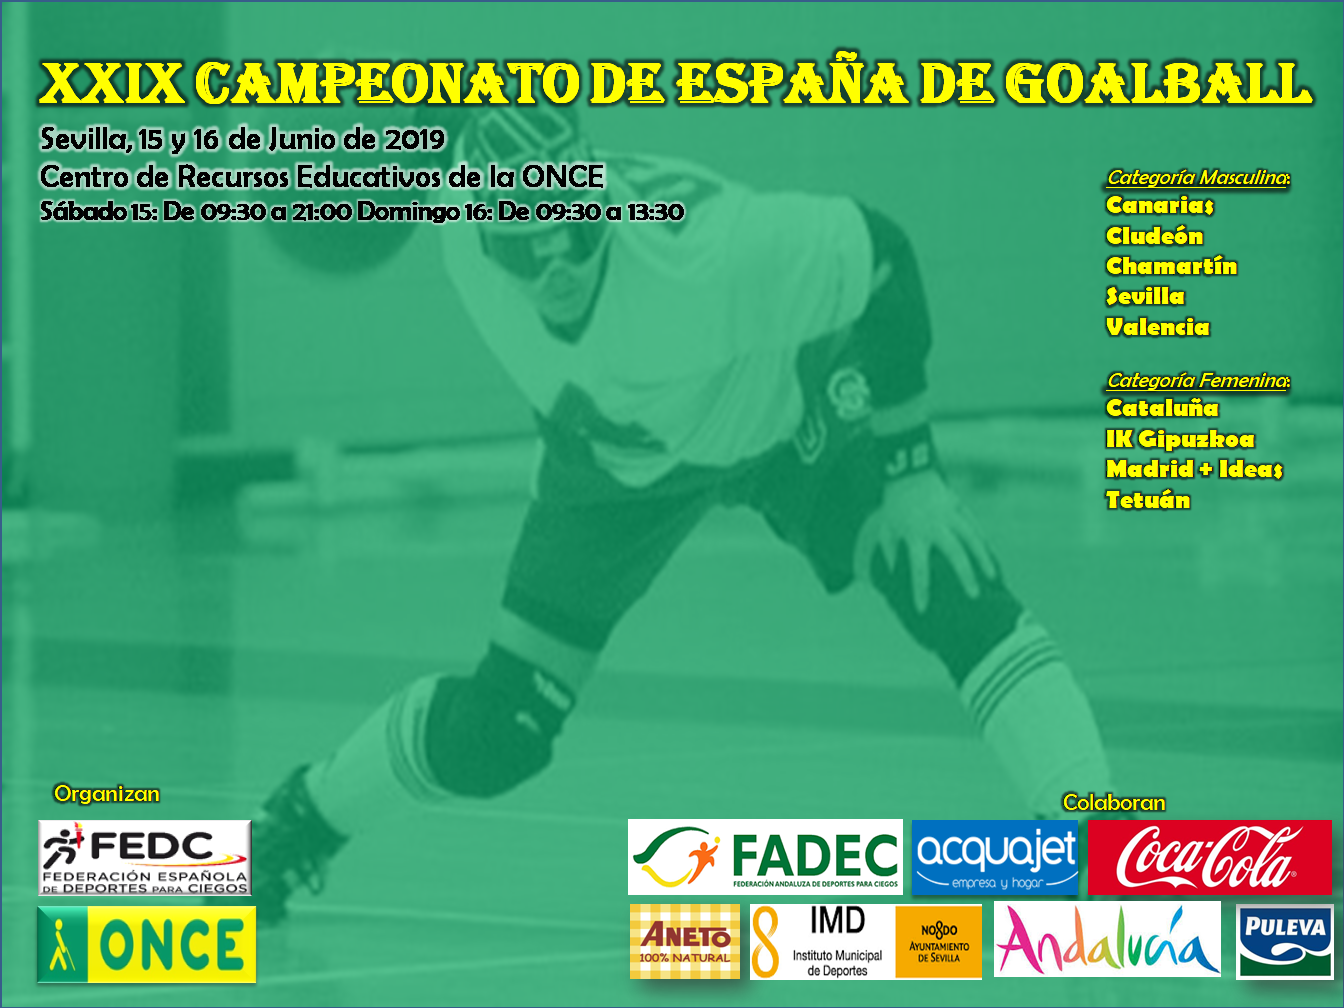 Cartel oficial del Campeonato de Goalball